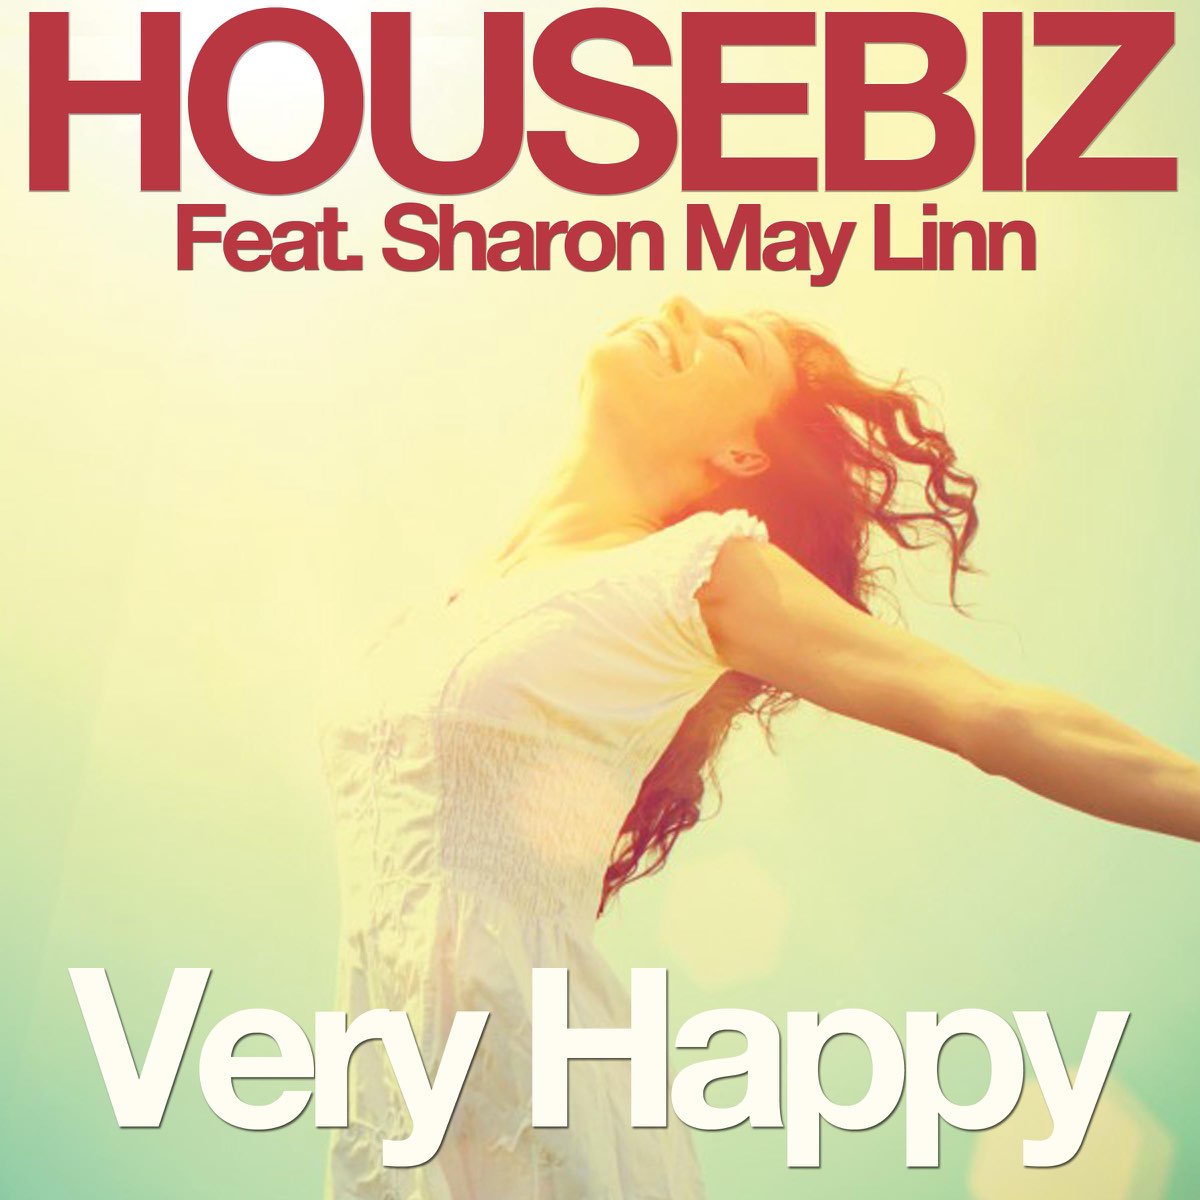 Be happy remix. Sharon May Linn. May Linn. May Lin. Very Happy.